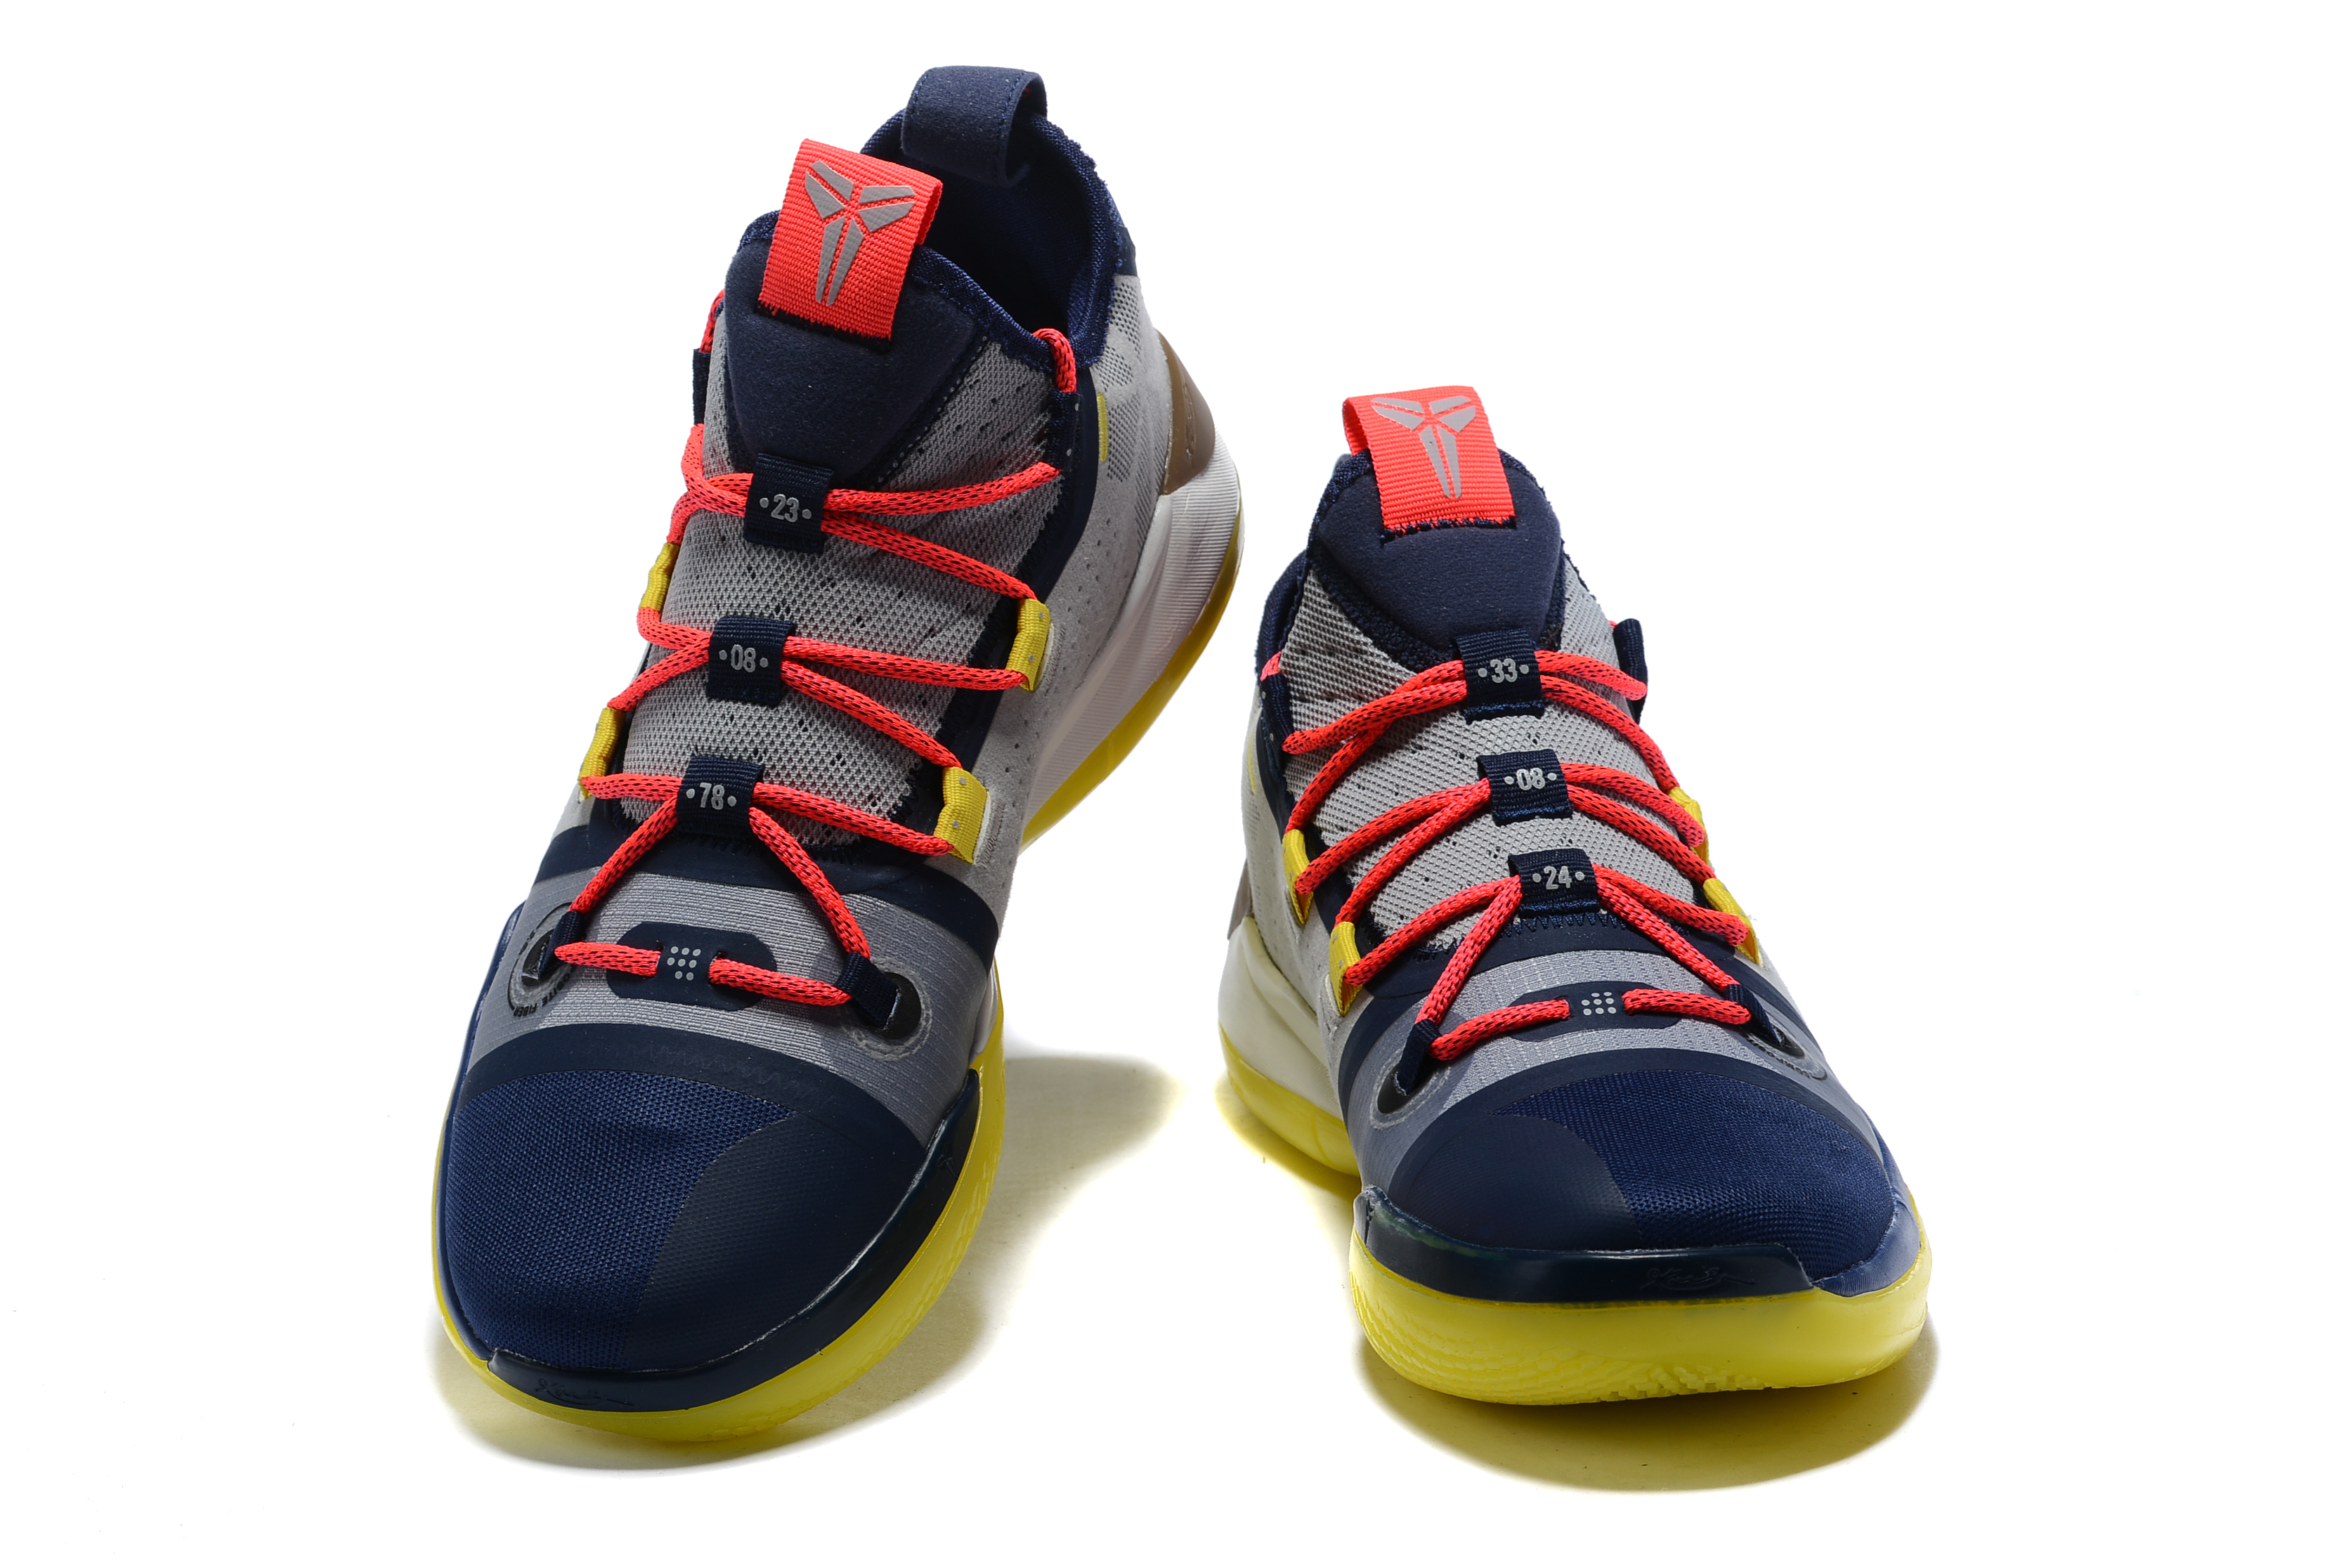 New Nike Kobe AD Laker Blue Flourencent Yellow Shoes